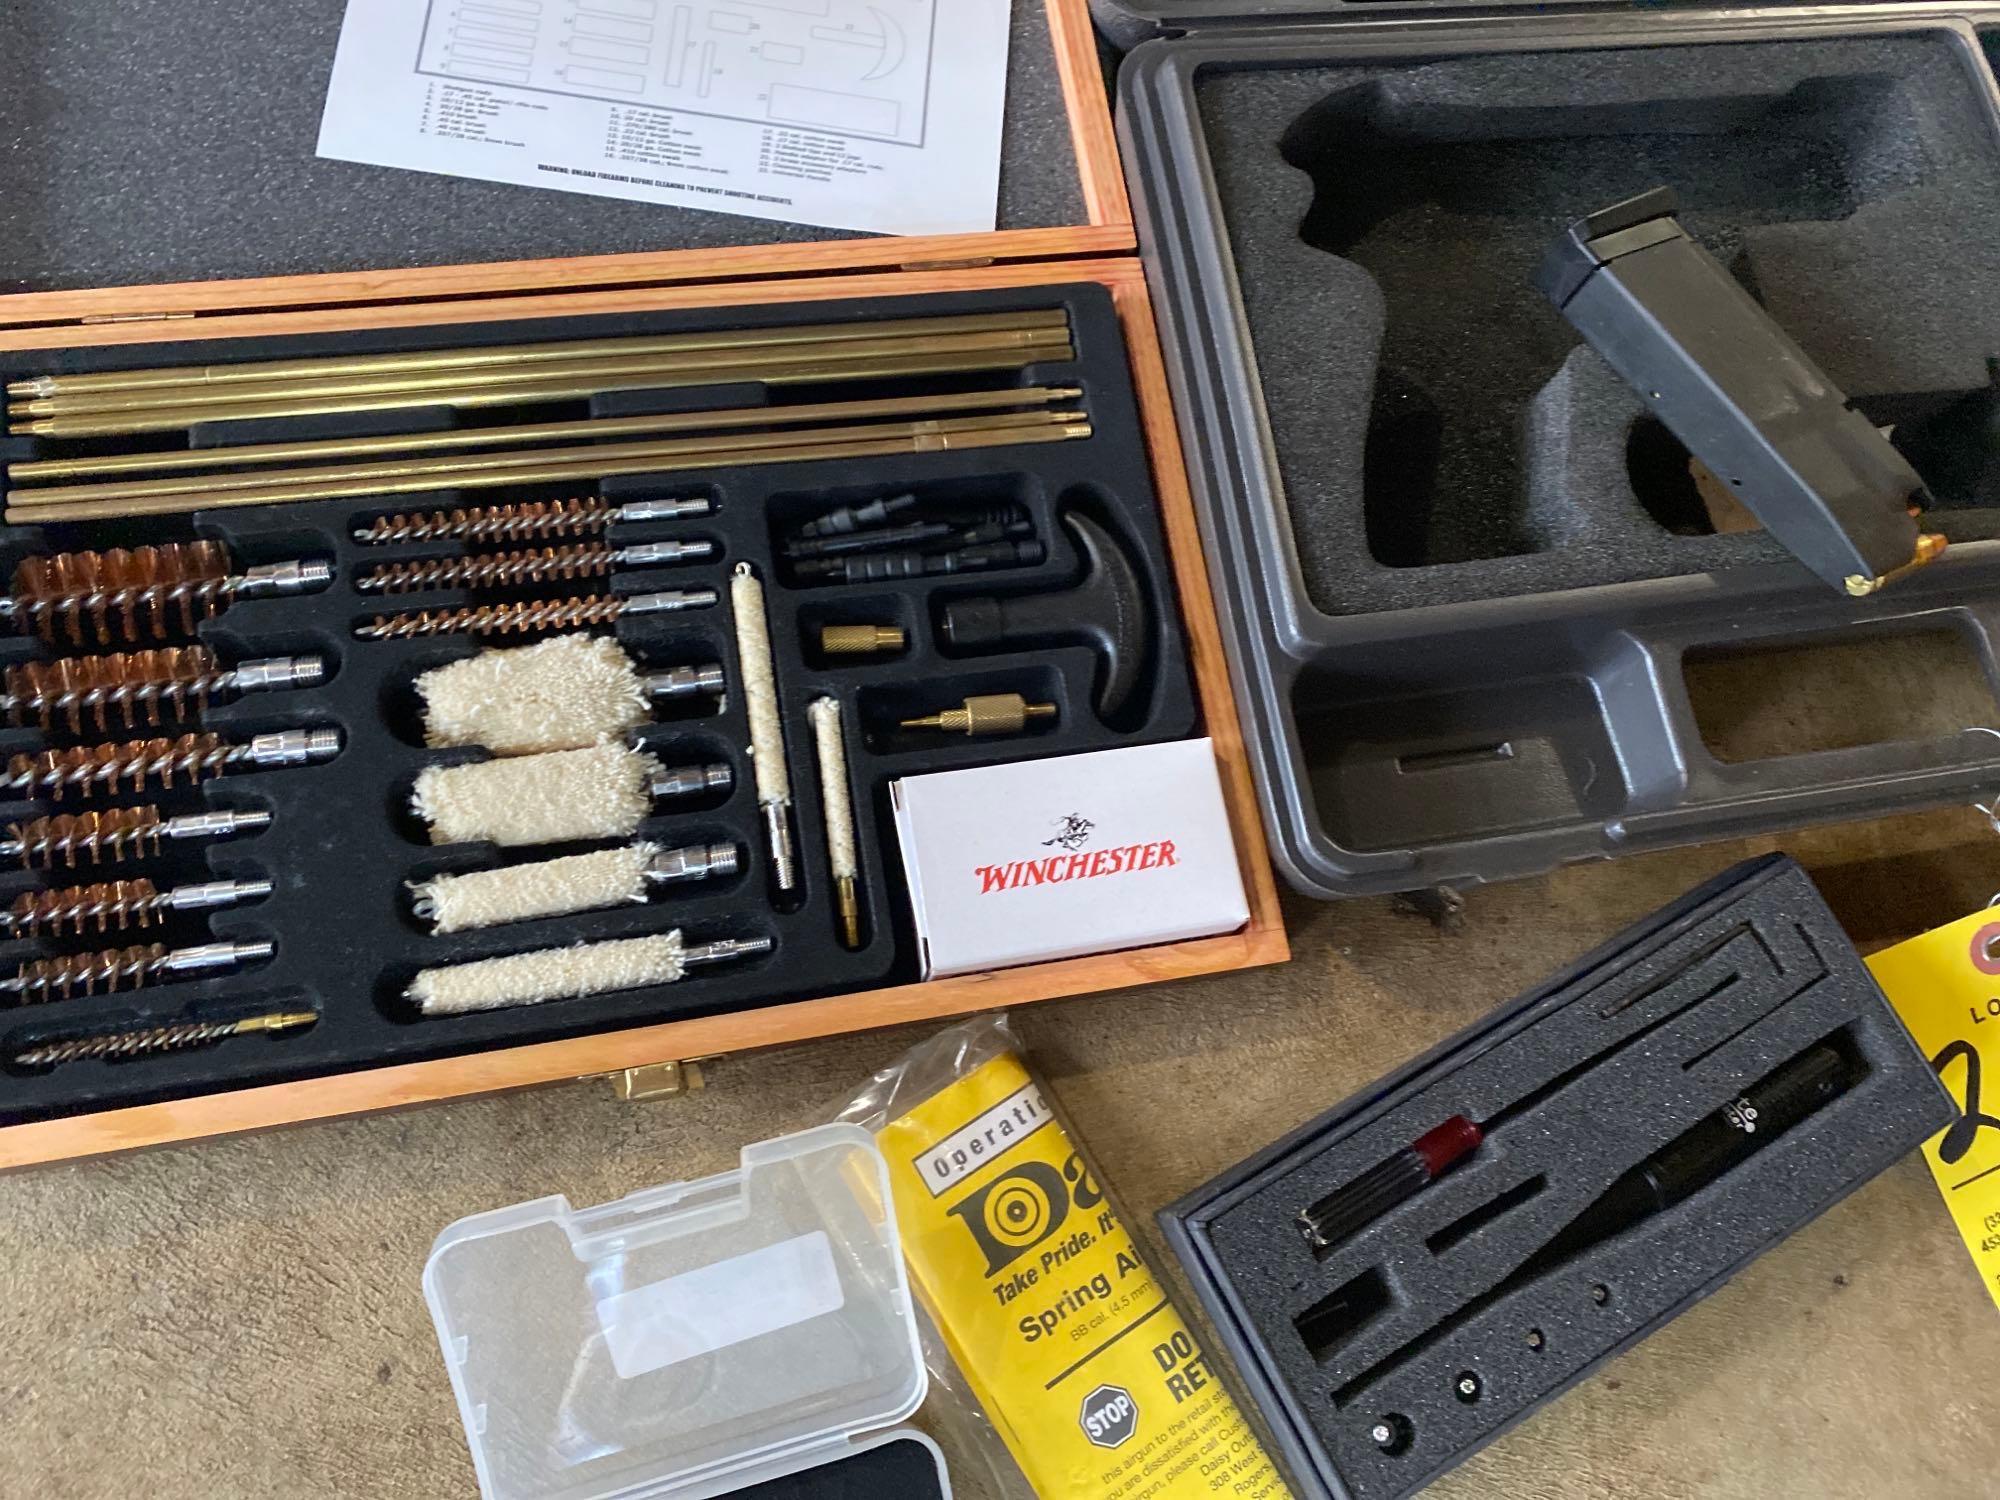 gun cleaning kits - powder keg - bore sighter